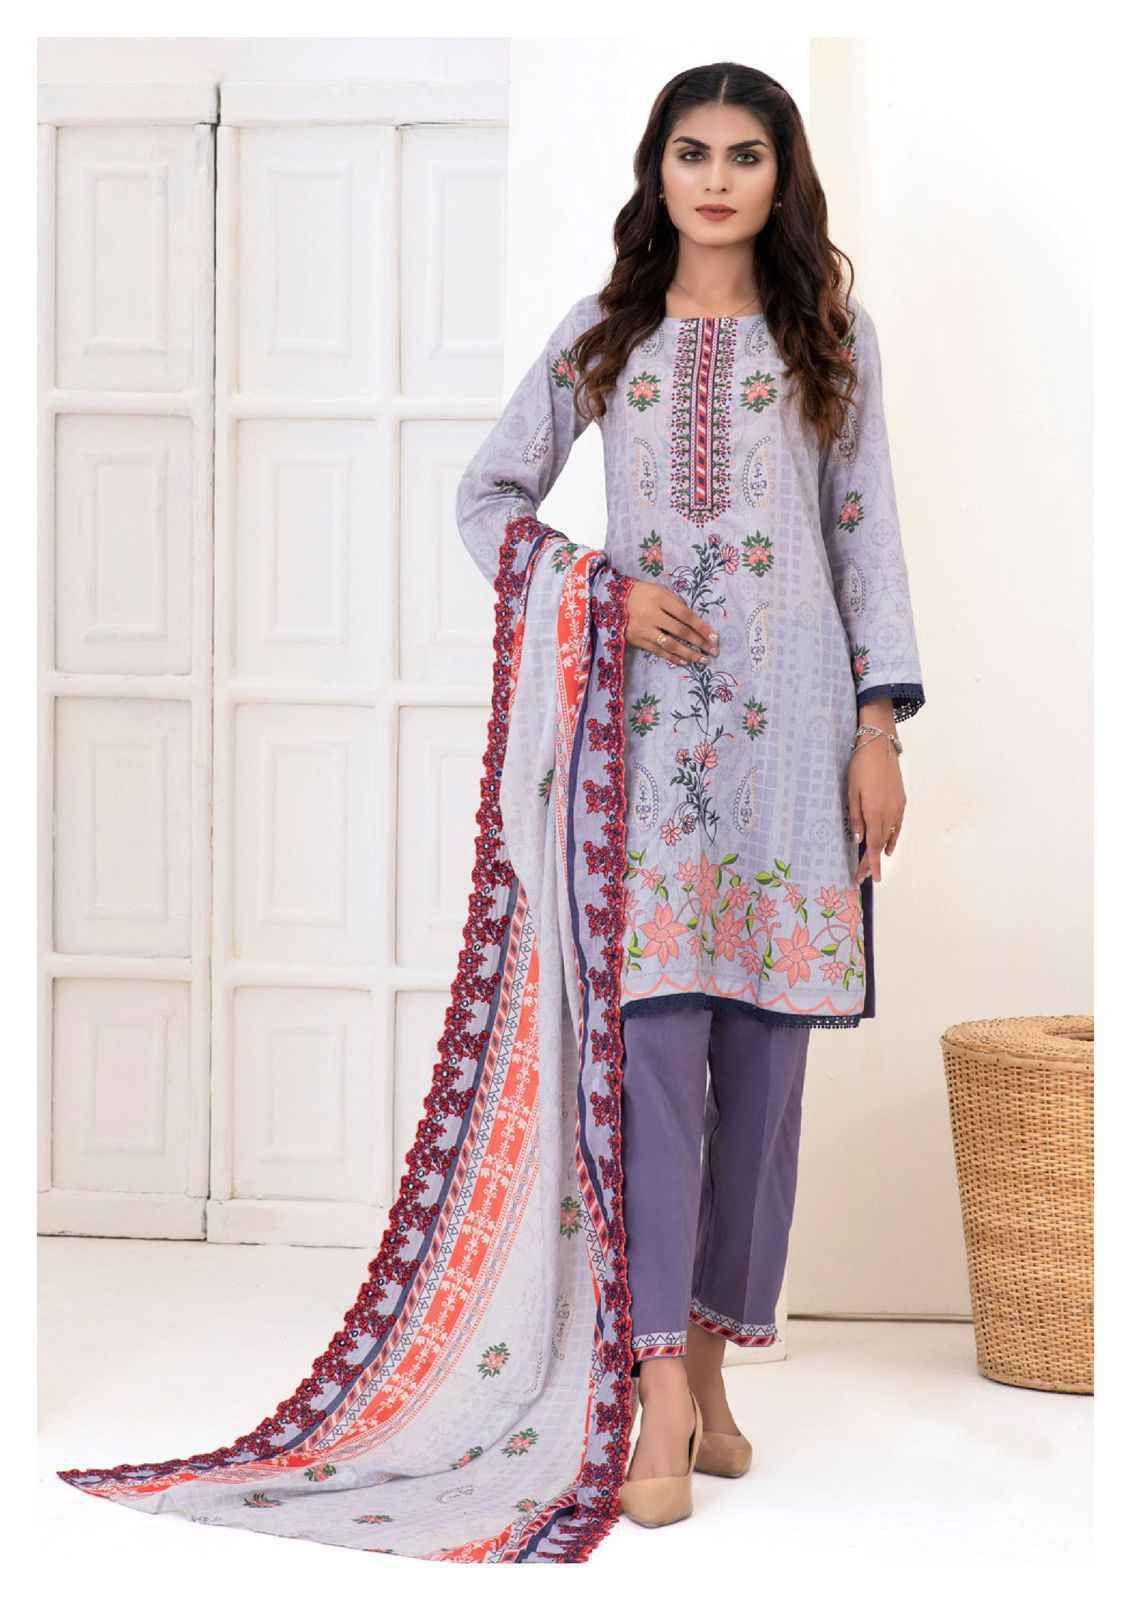 Gull Aahmed Riwayat Vol 4 Lawn Cotton Dress Material 6 pcs Catalogue - Wholesale Factory